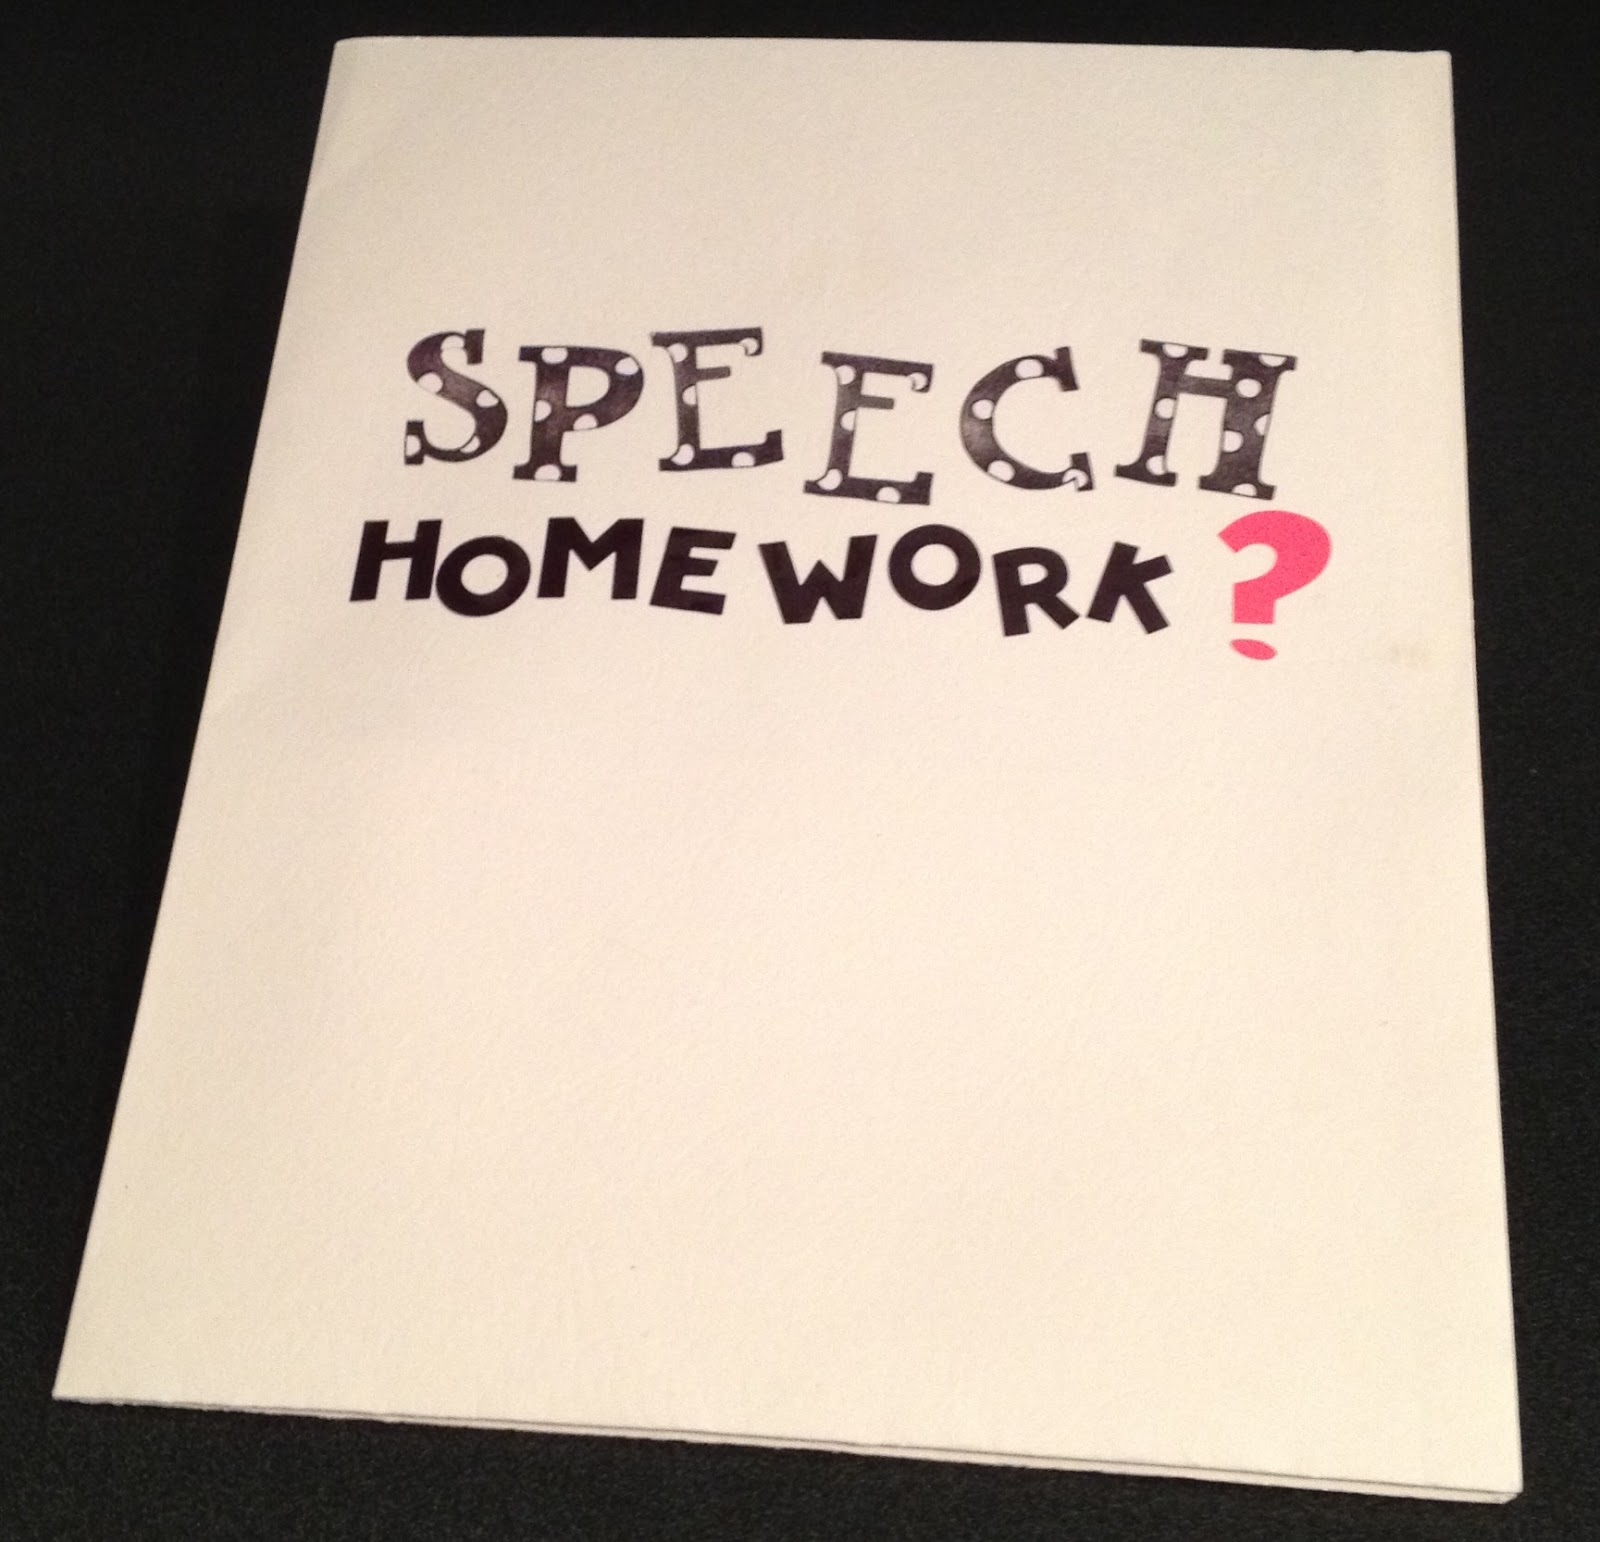 Speaking of speech summer homework